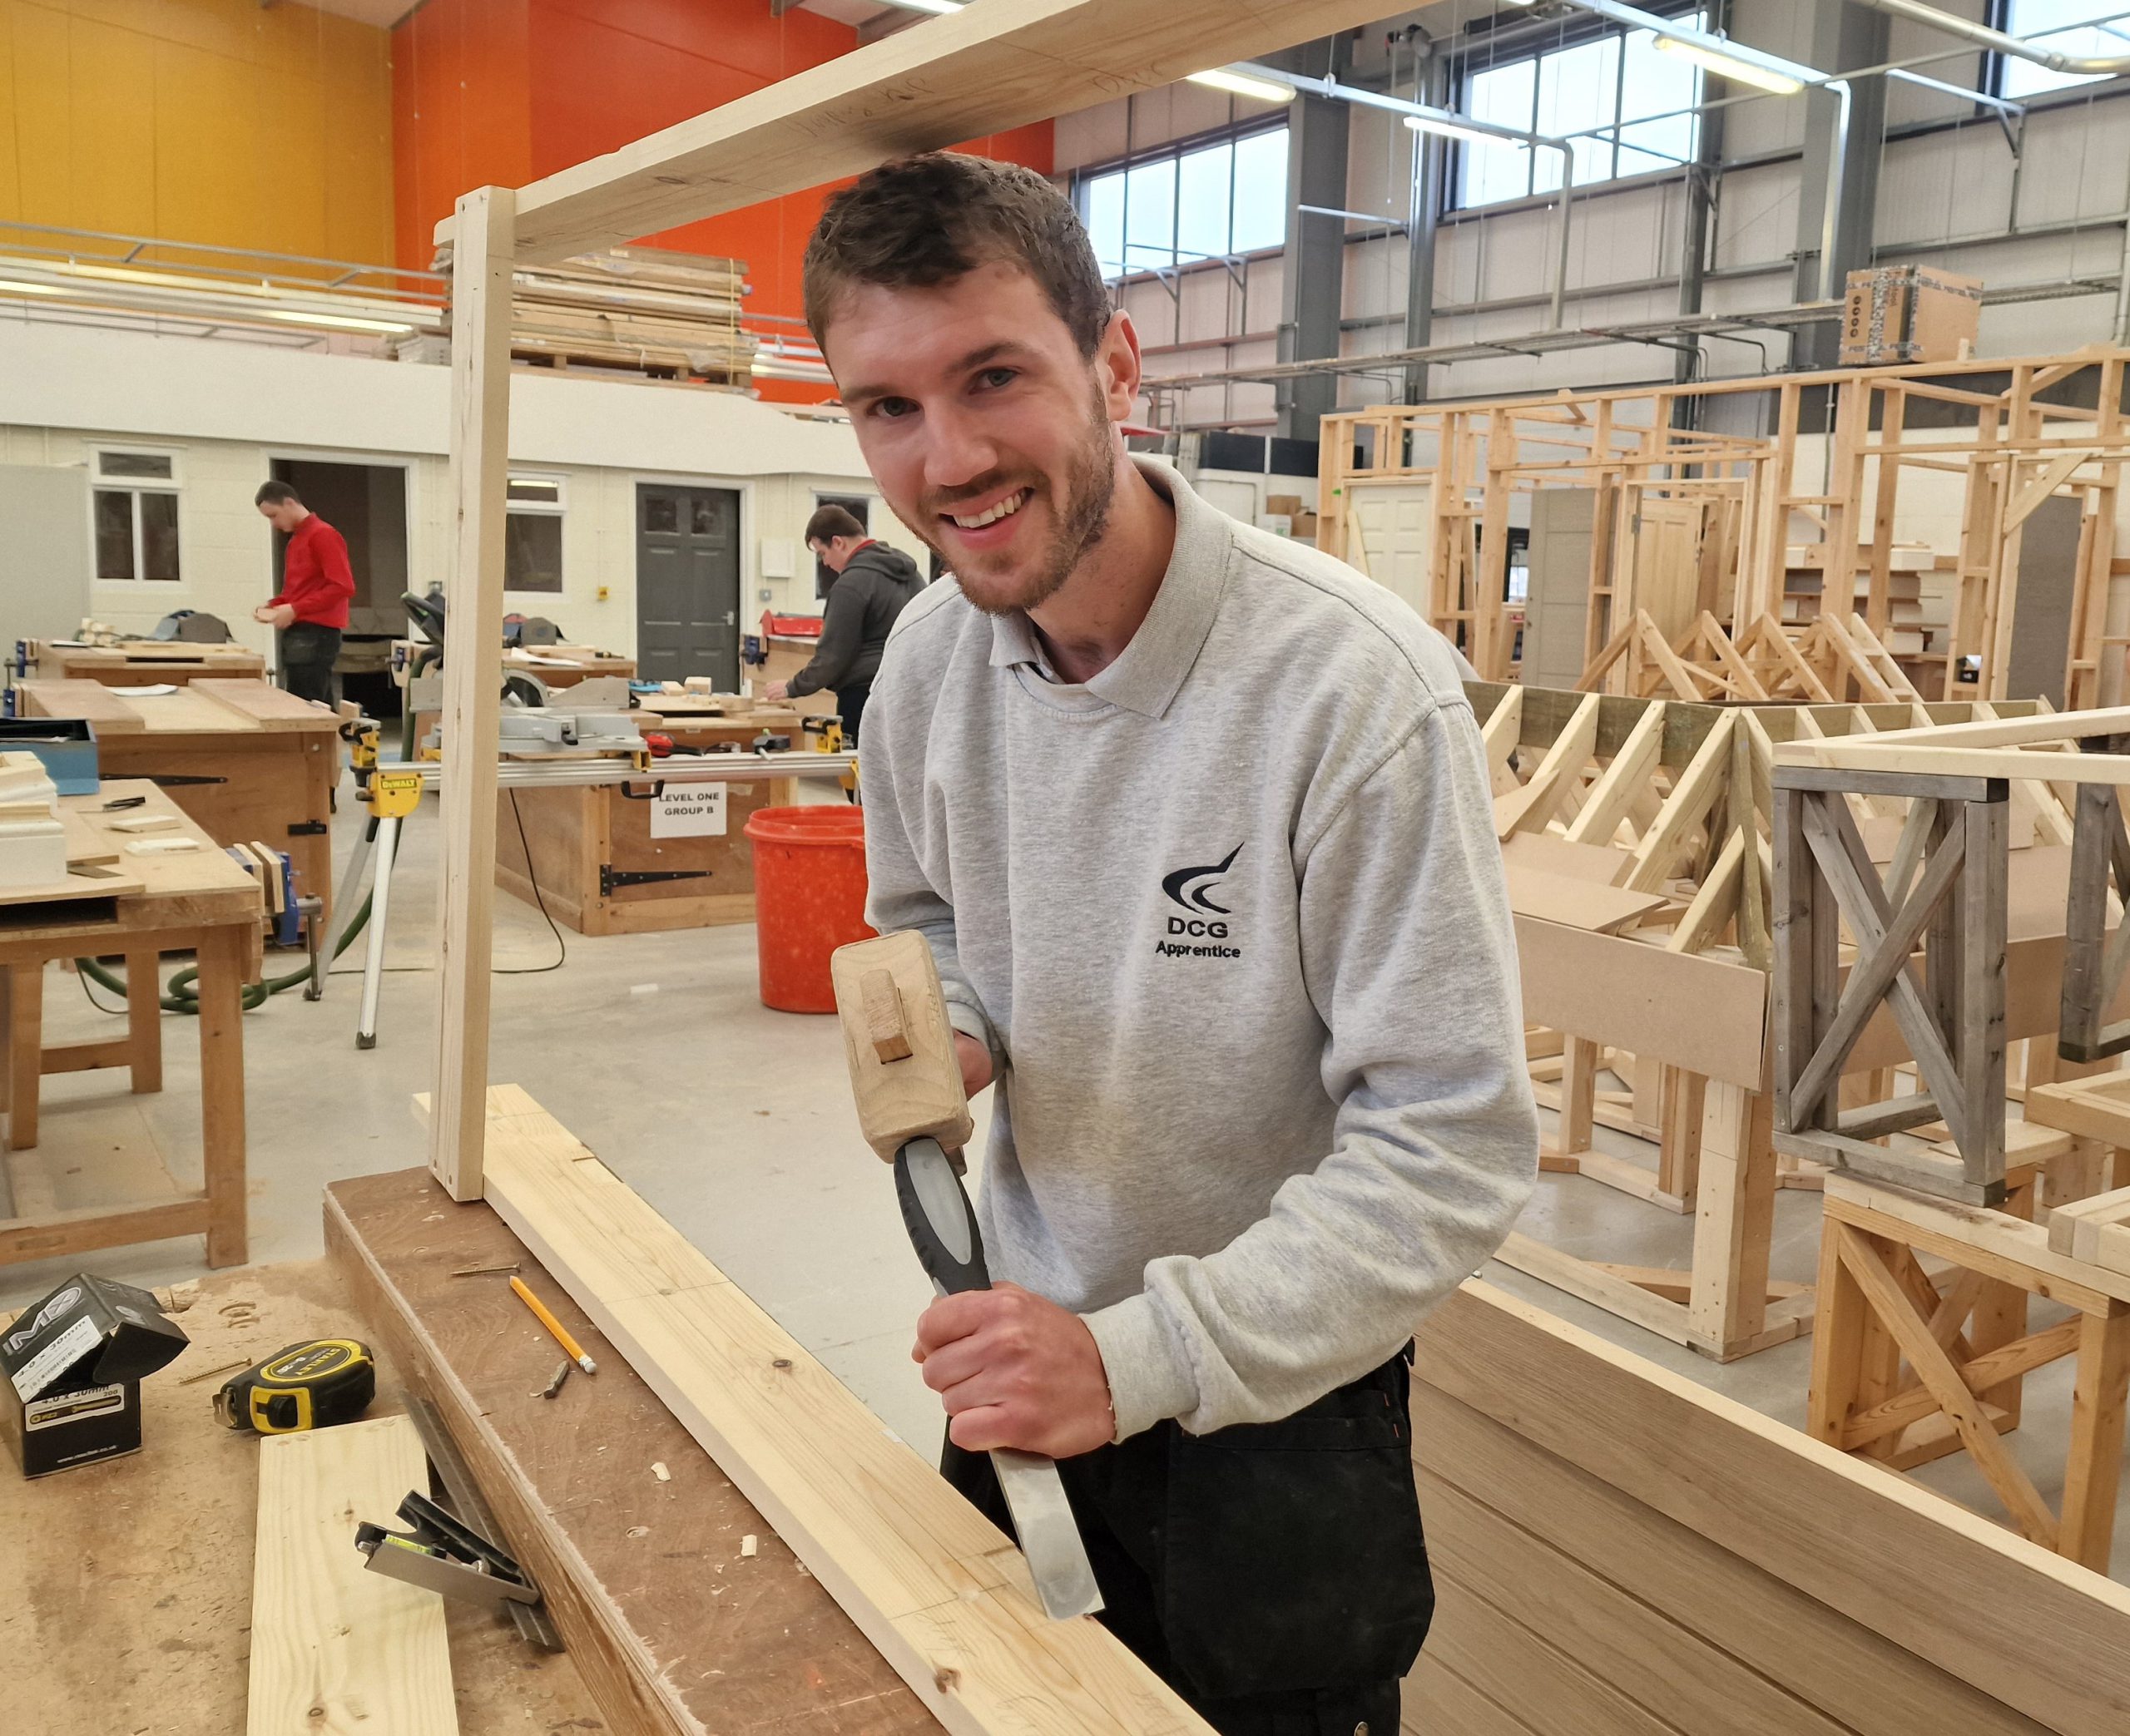 DCG Carpentry apprentice Alex Avis plaining wood at Screwfix